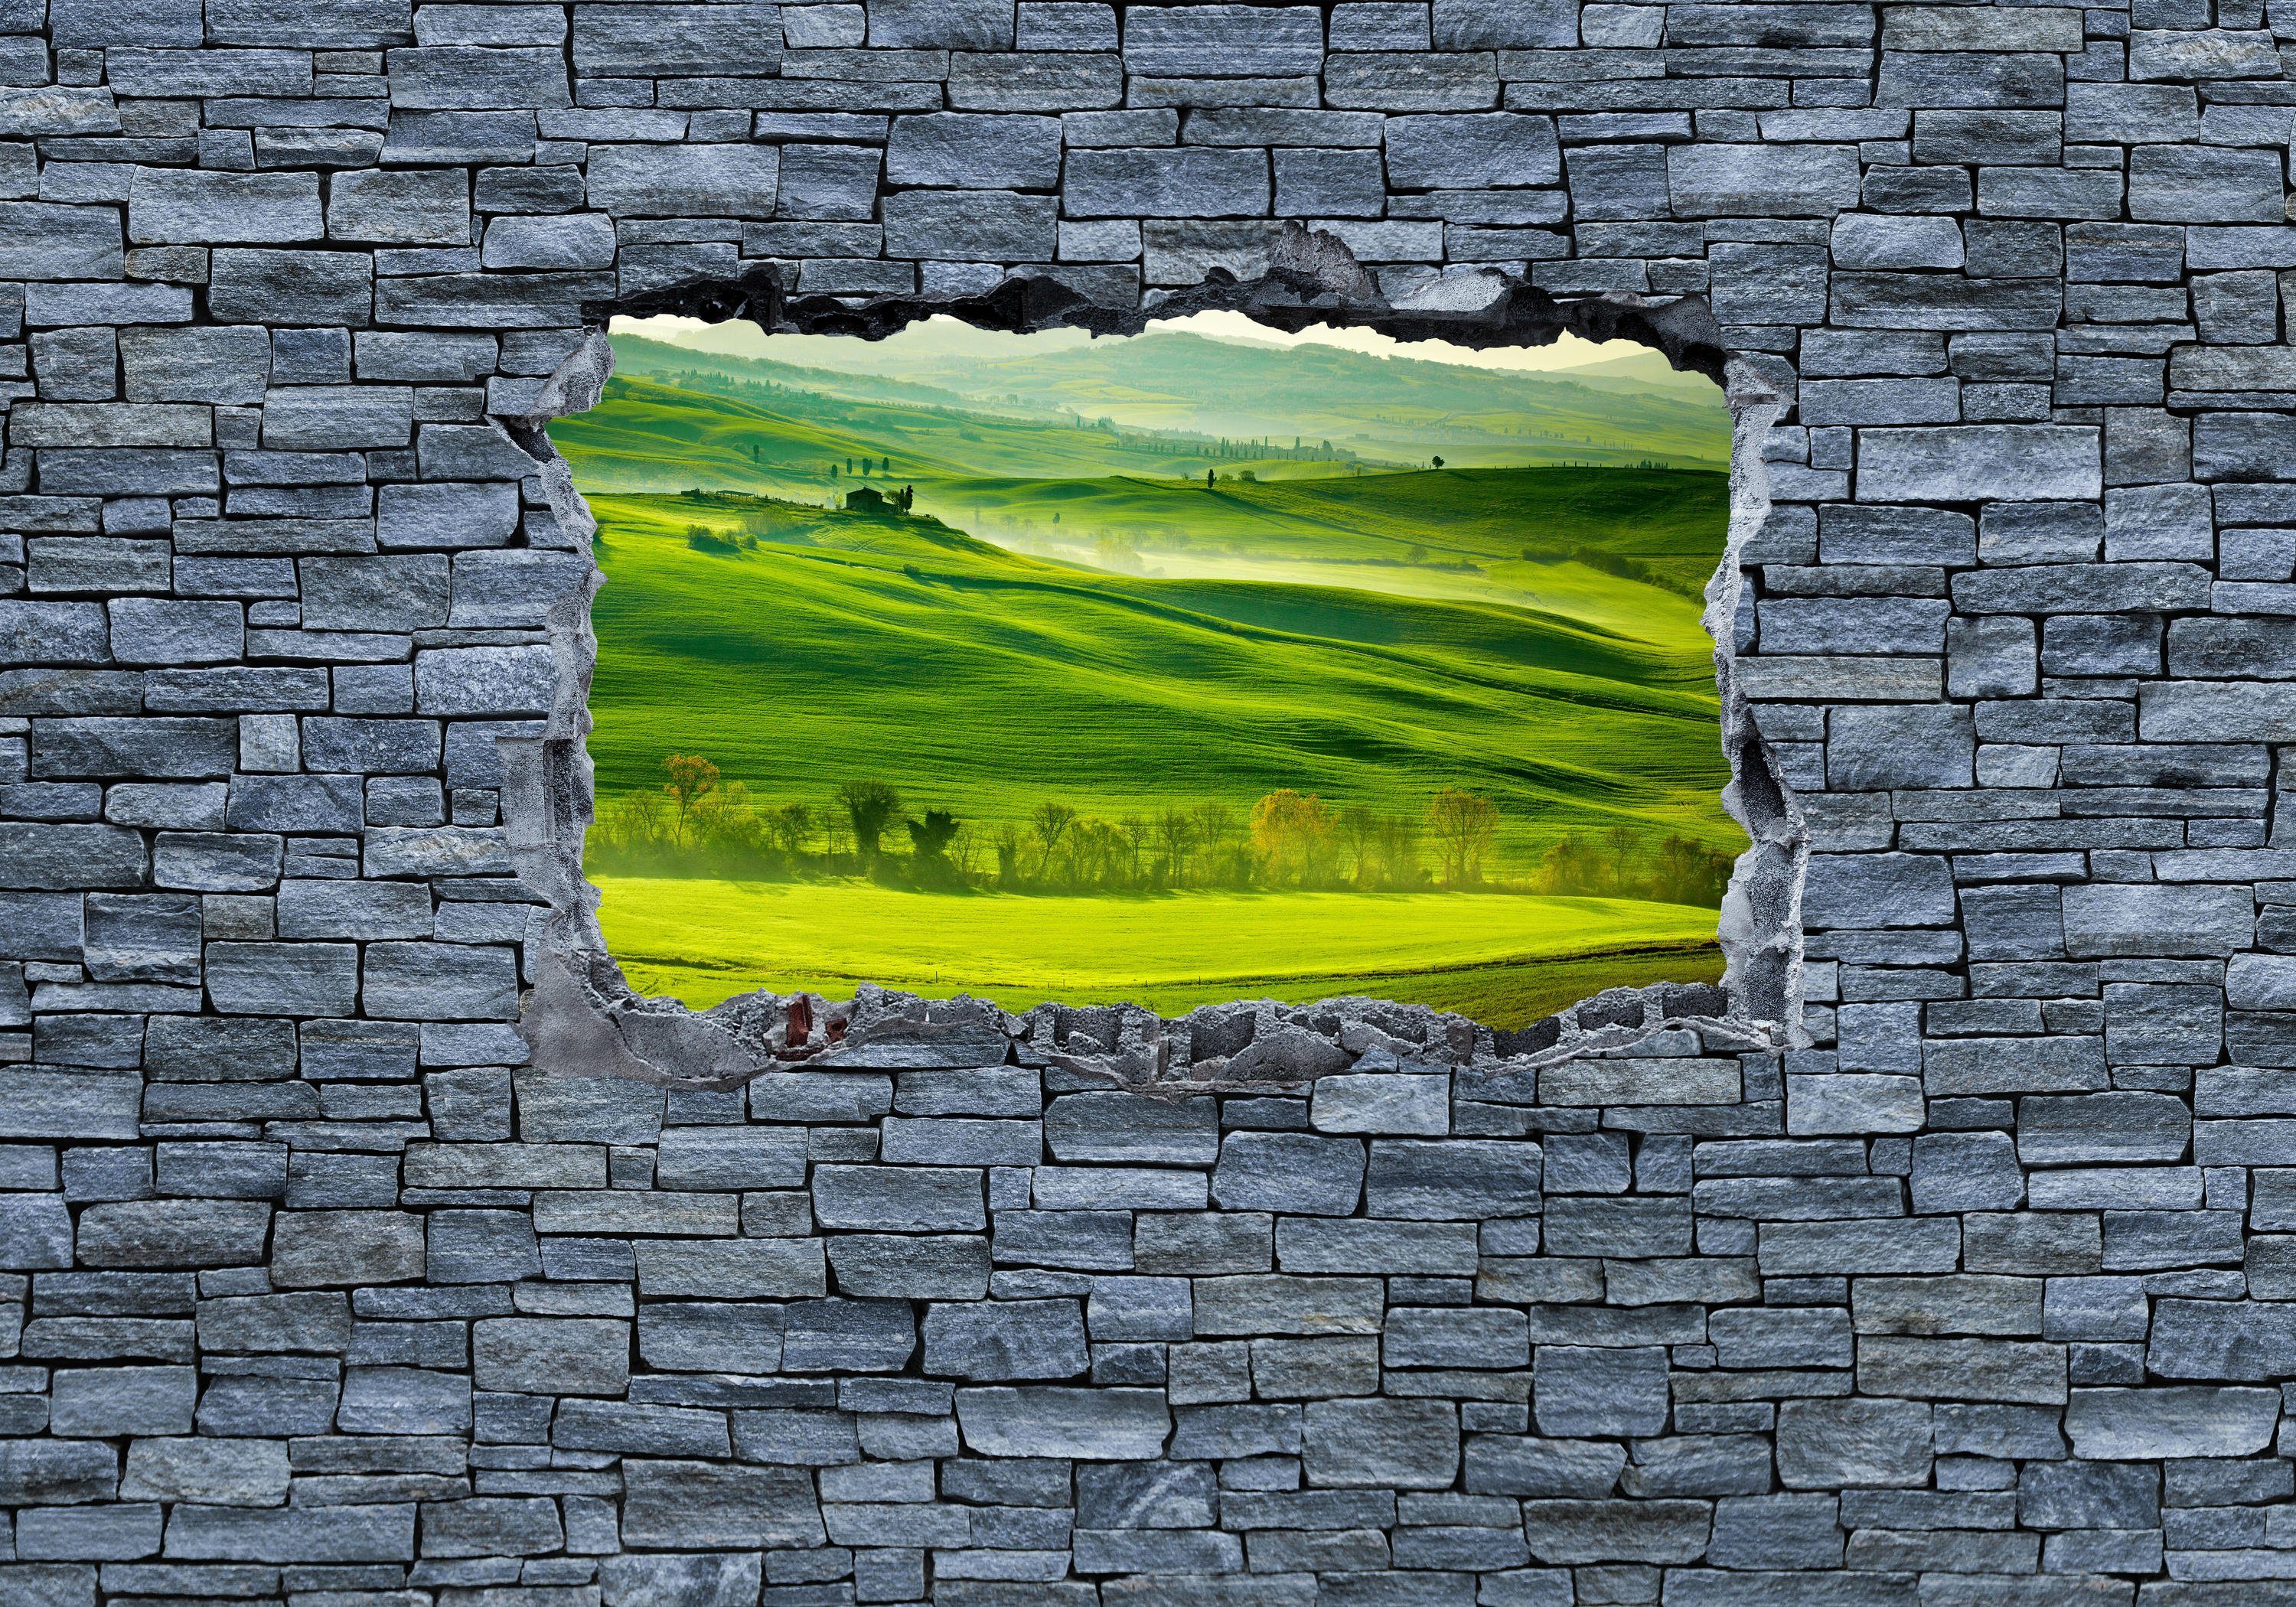 wandmotiv24 Fototapete 3D Grüne Toskana - grobe Steinmauer, glatt, Wandtapete, Motivtapete, matt, Vliestapete